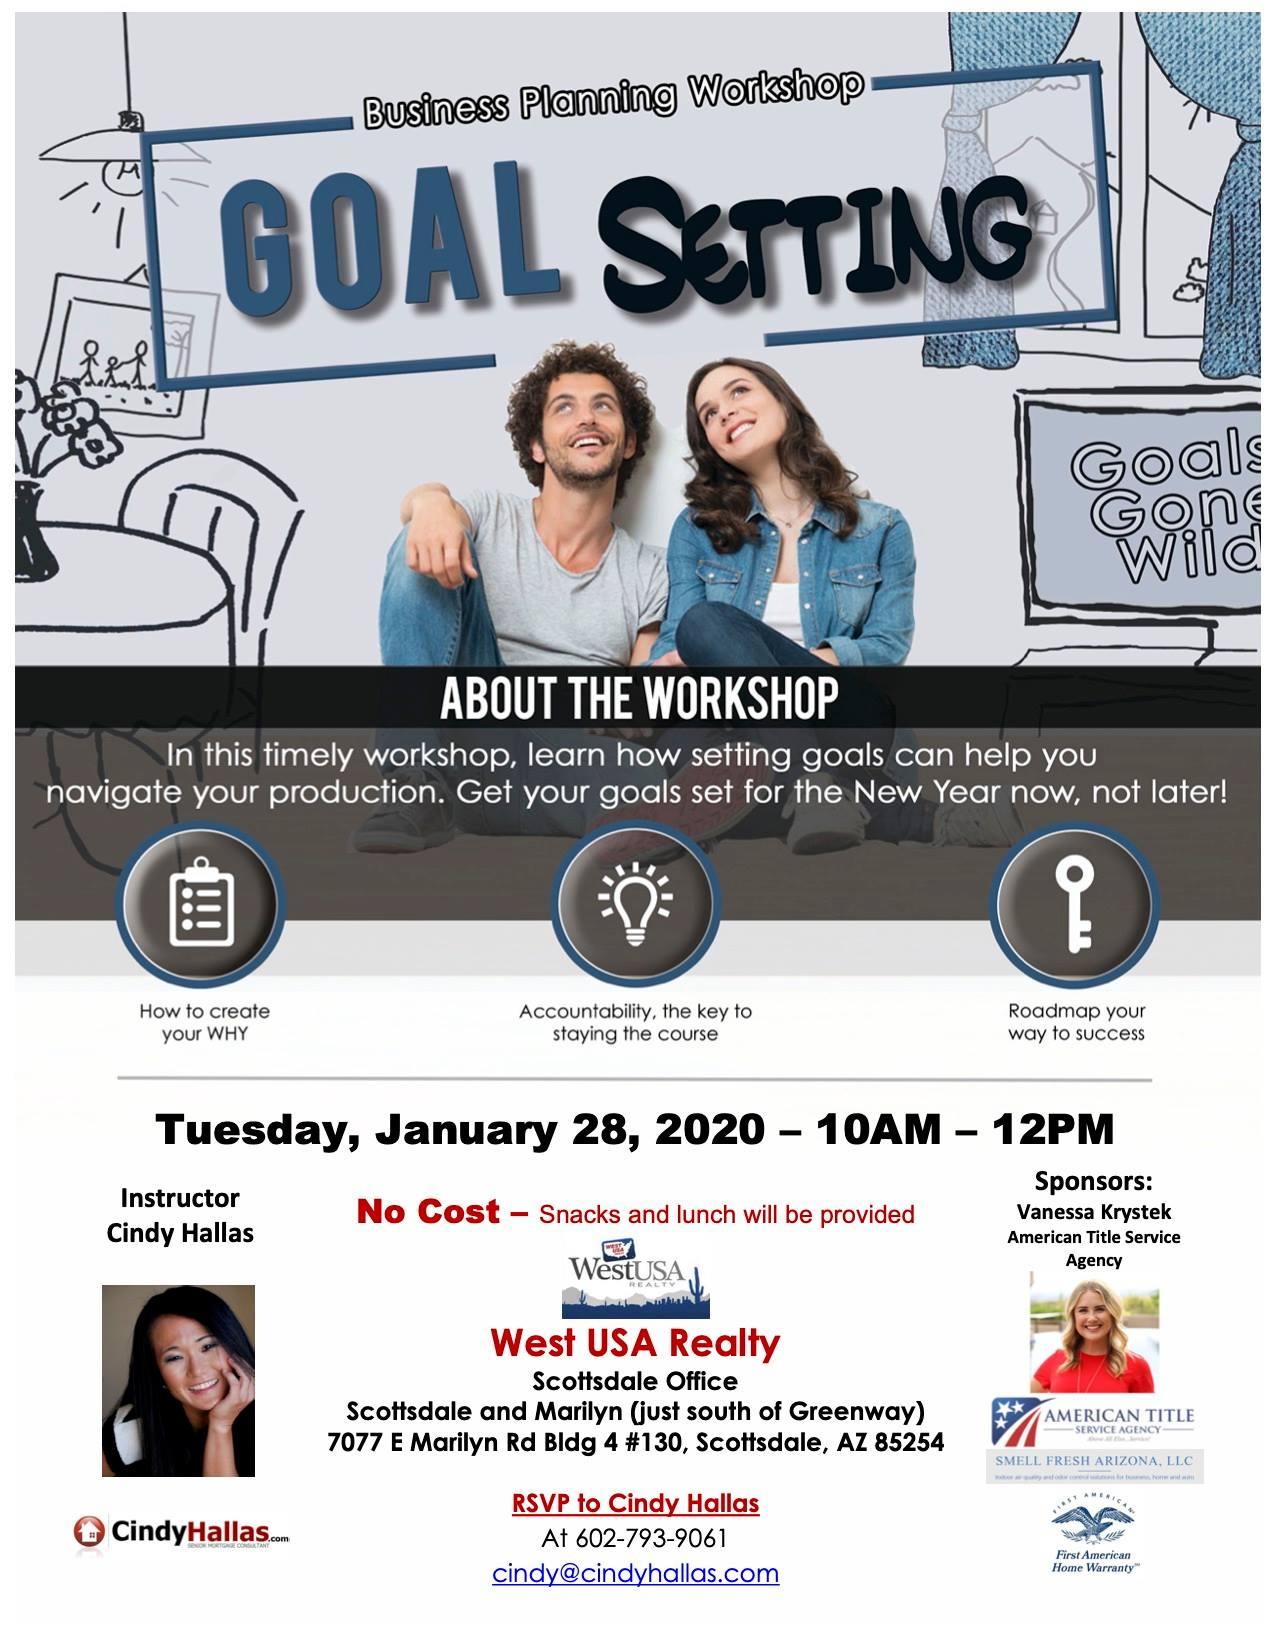 Goal Setting - A Business Planning Workshop